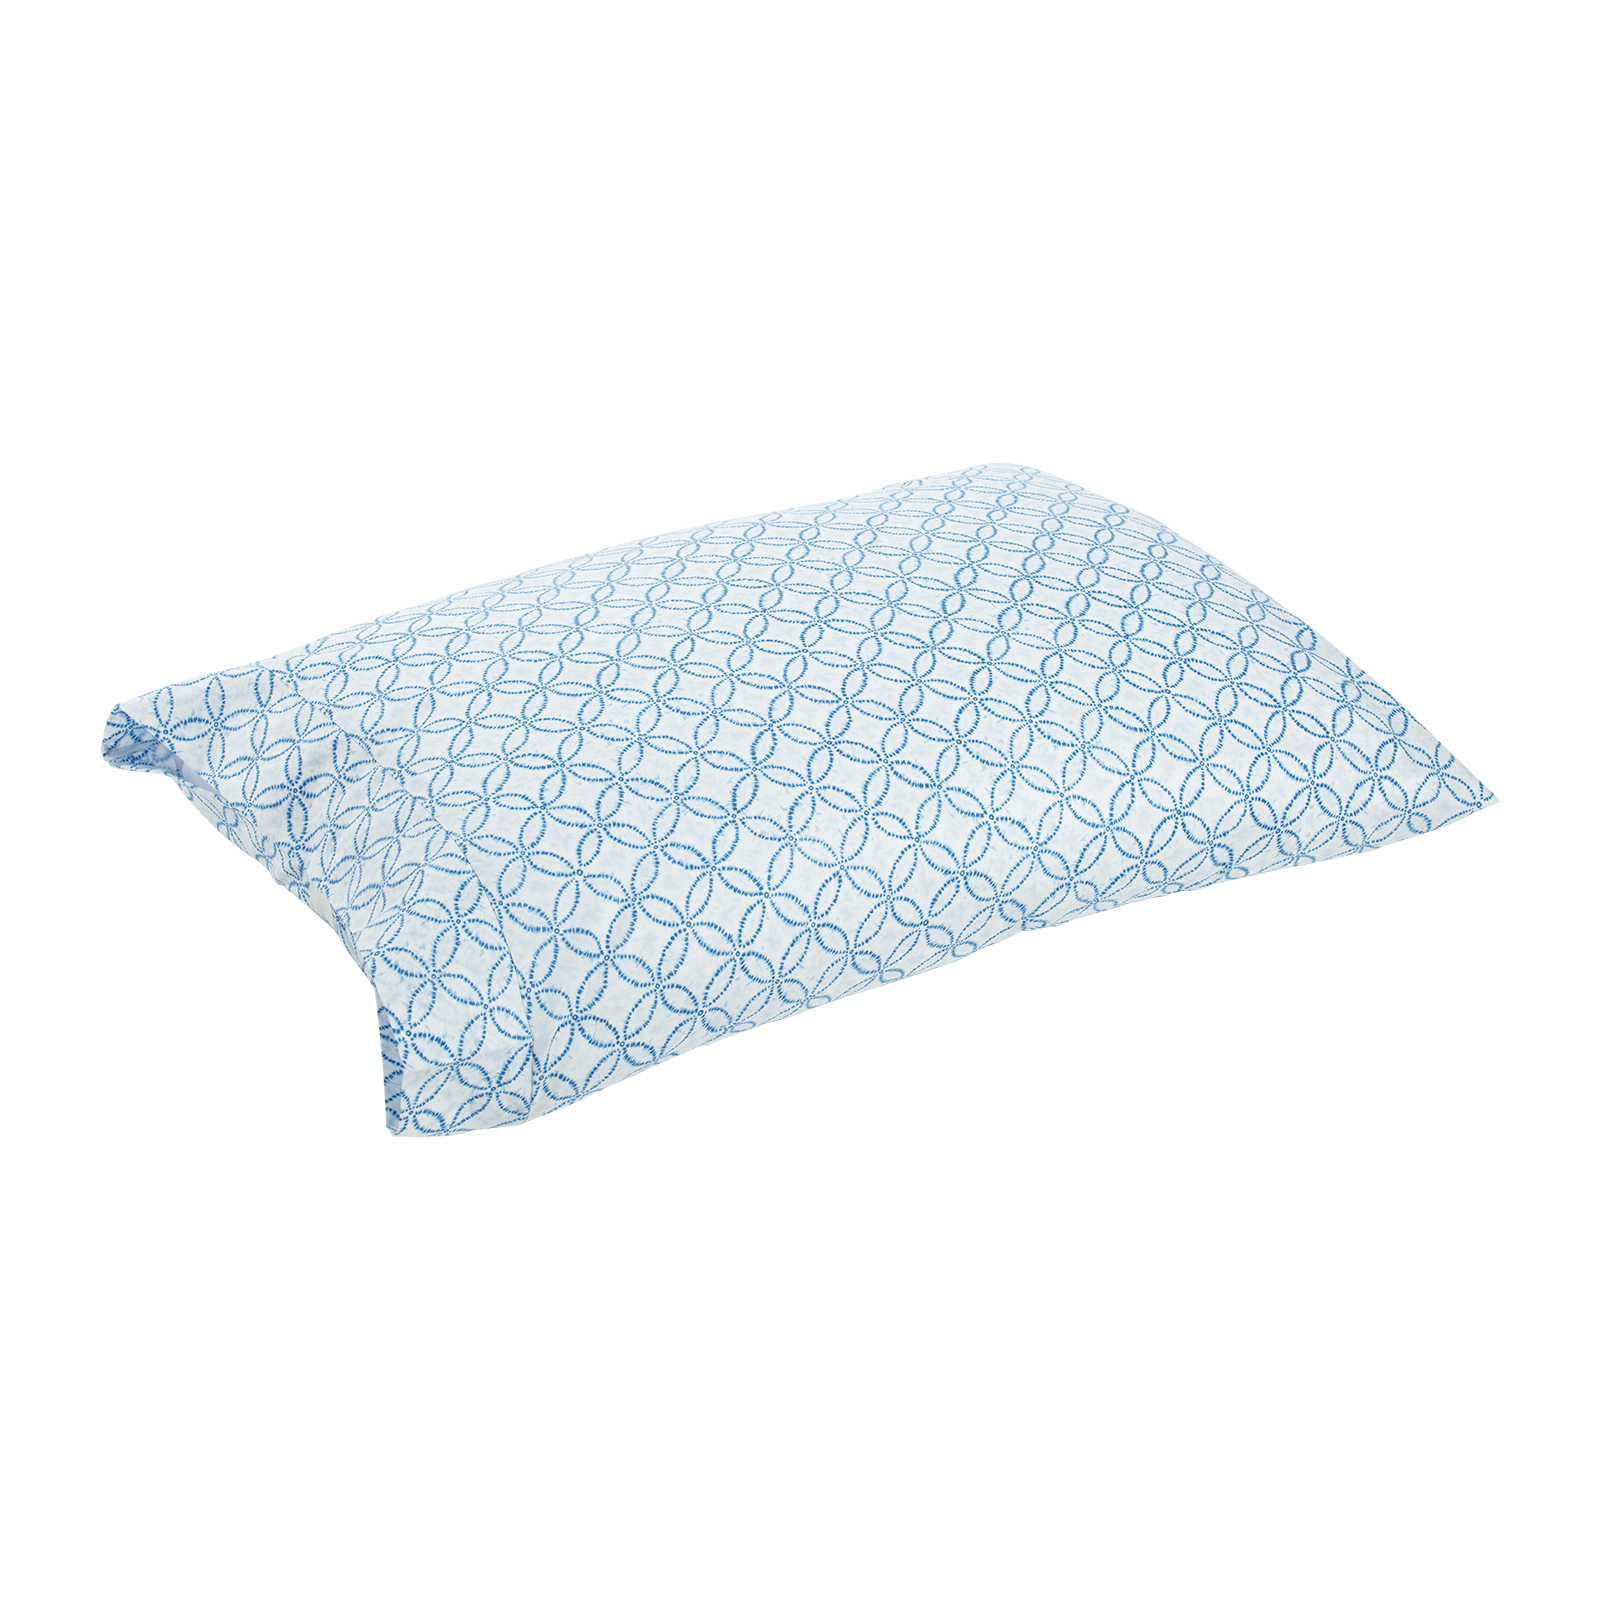 J-Life Taidai Light Blue Pillowcase